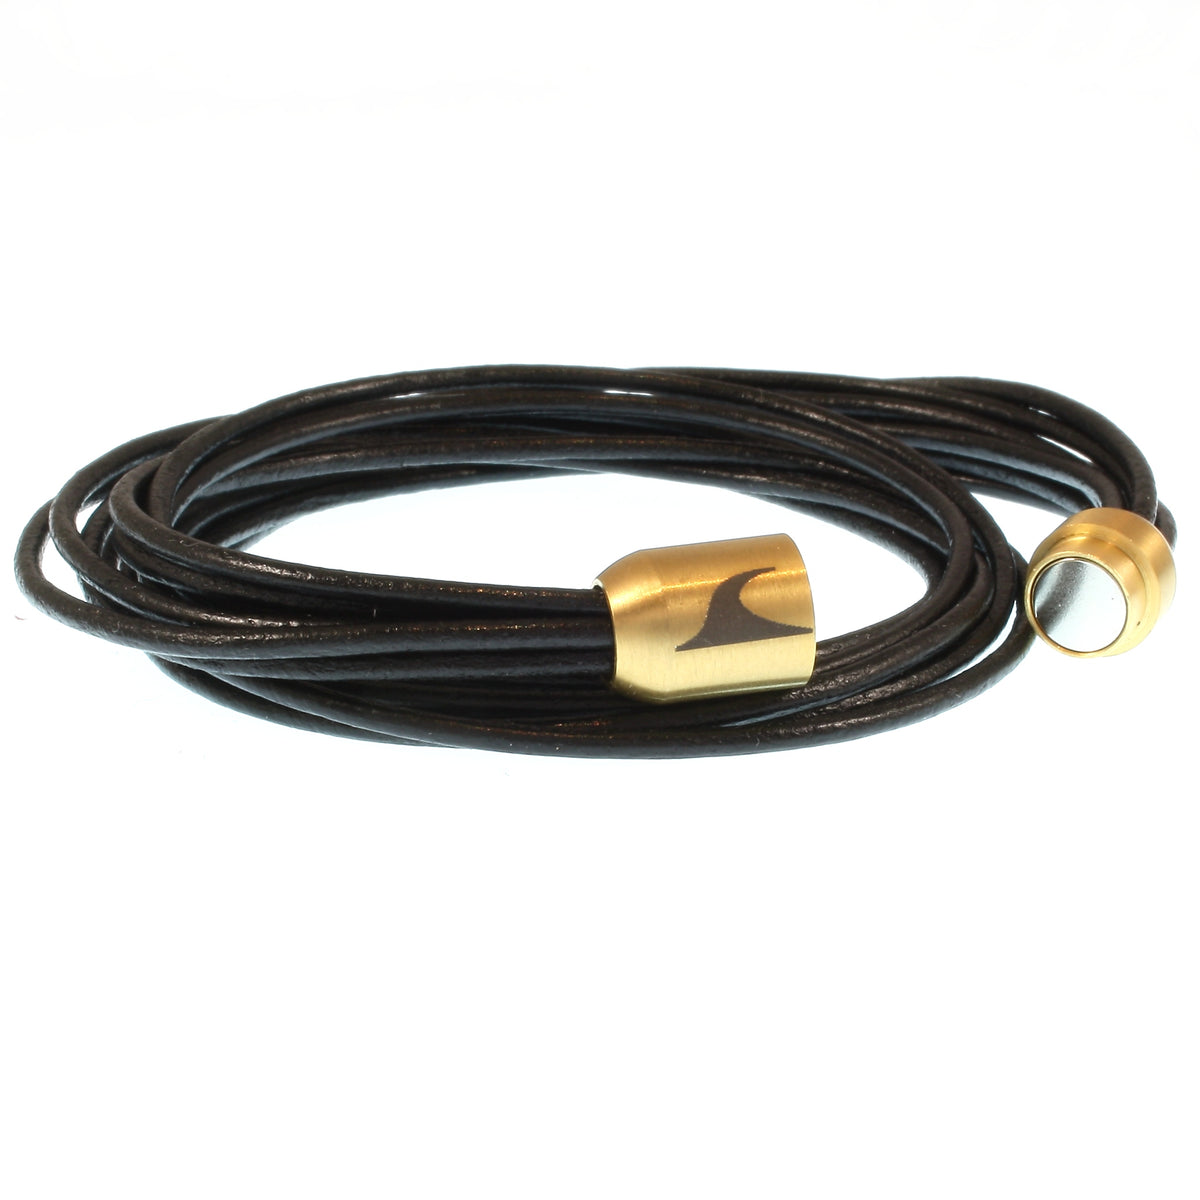 Damen-Leder-armband-fem2-schwarz-gold-Edelstahlverschluss-offen-wavepirate-shop-r